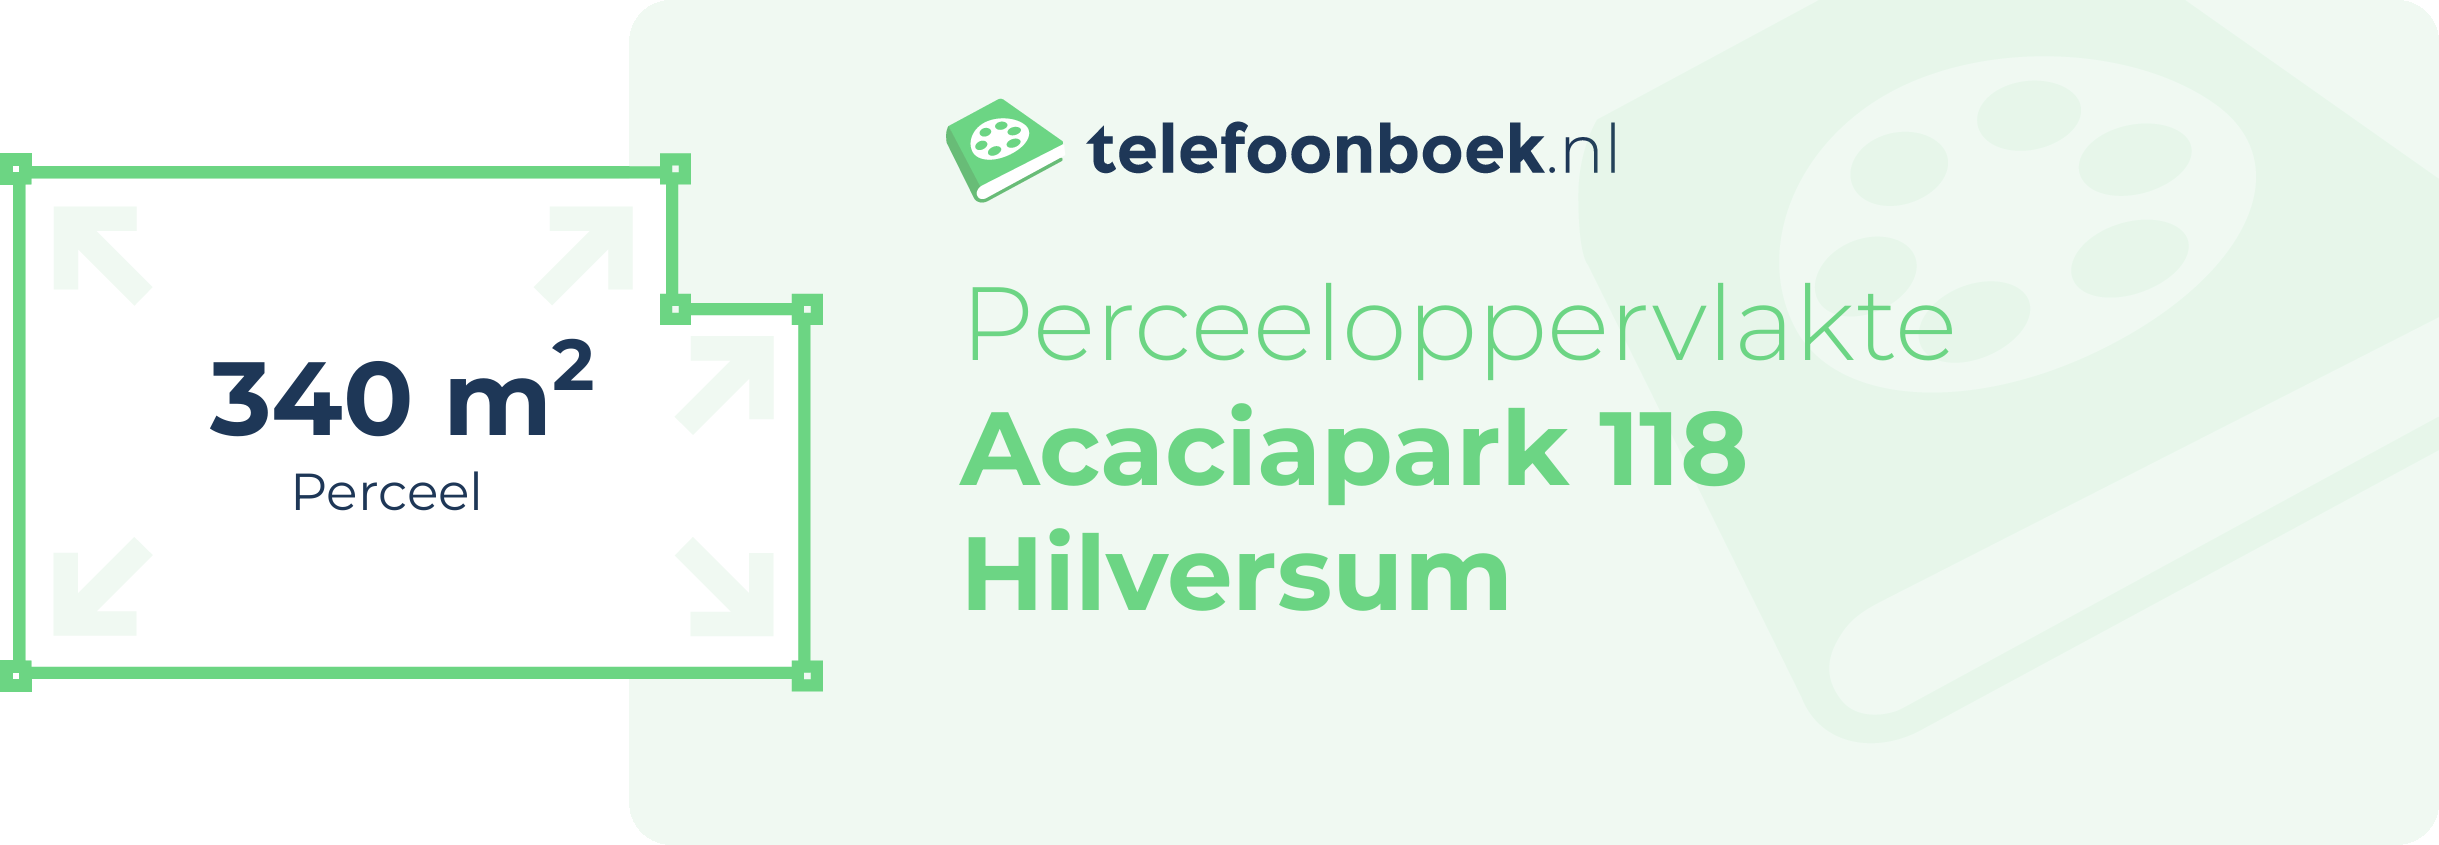 Perceeloppervlakte Acaciapark 118 Hilversum